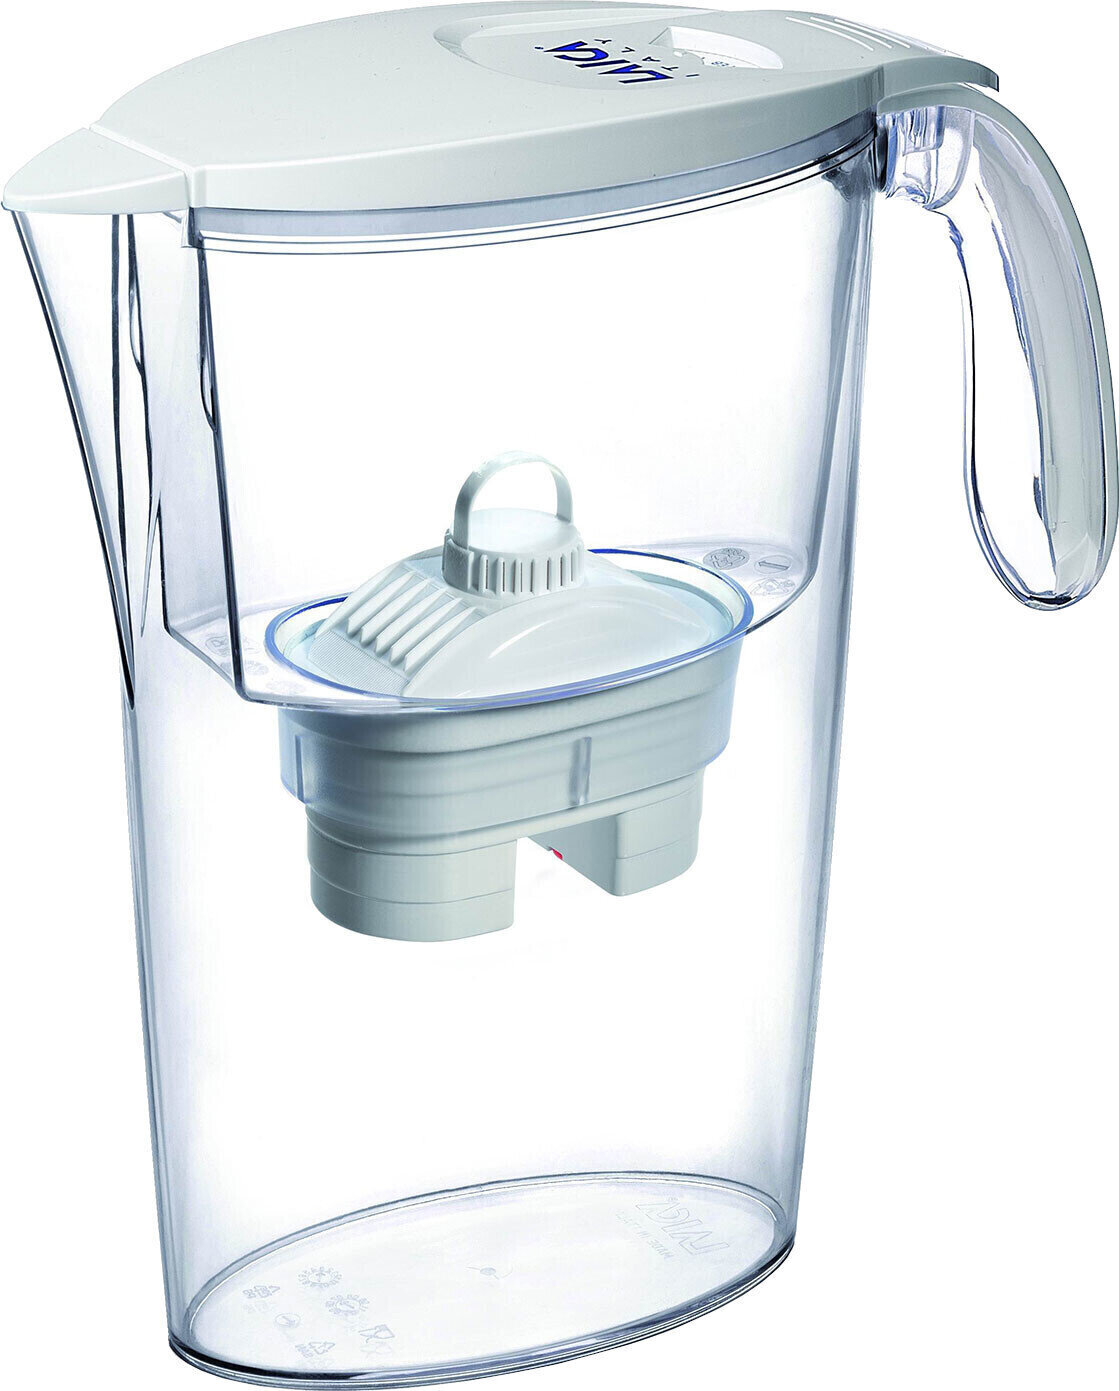 Filter kettle Laica J11-AB